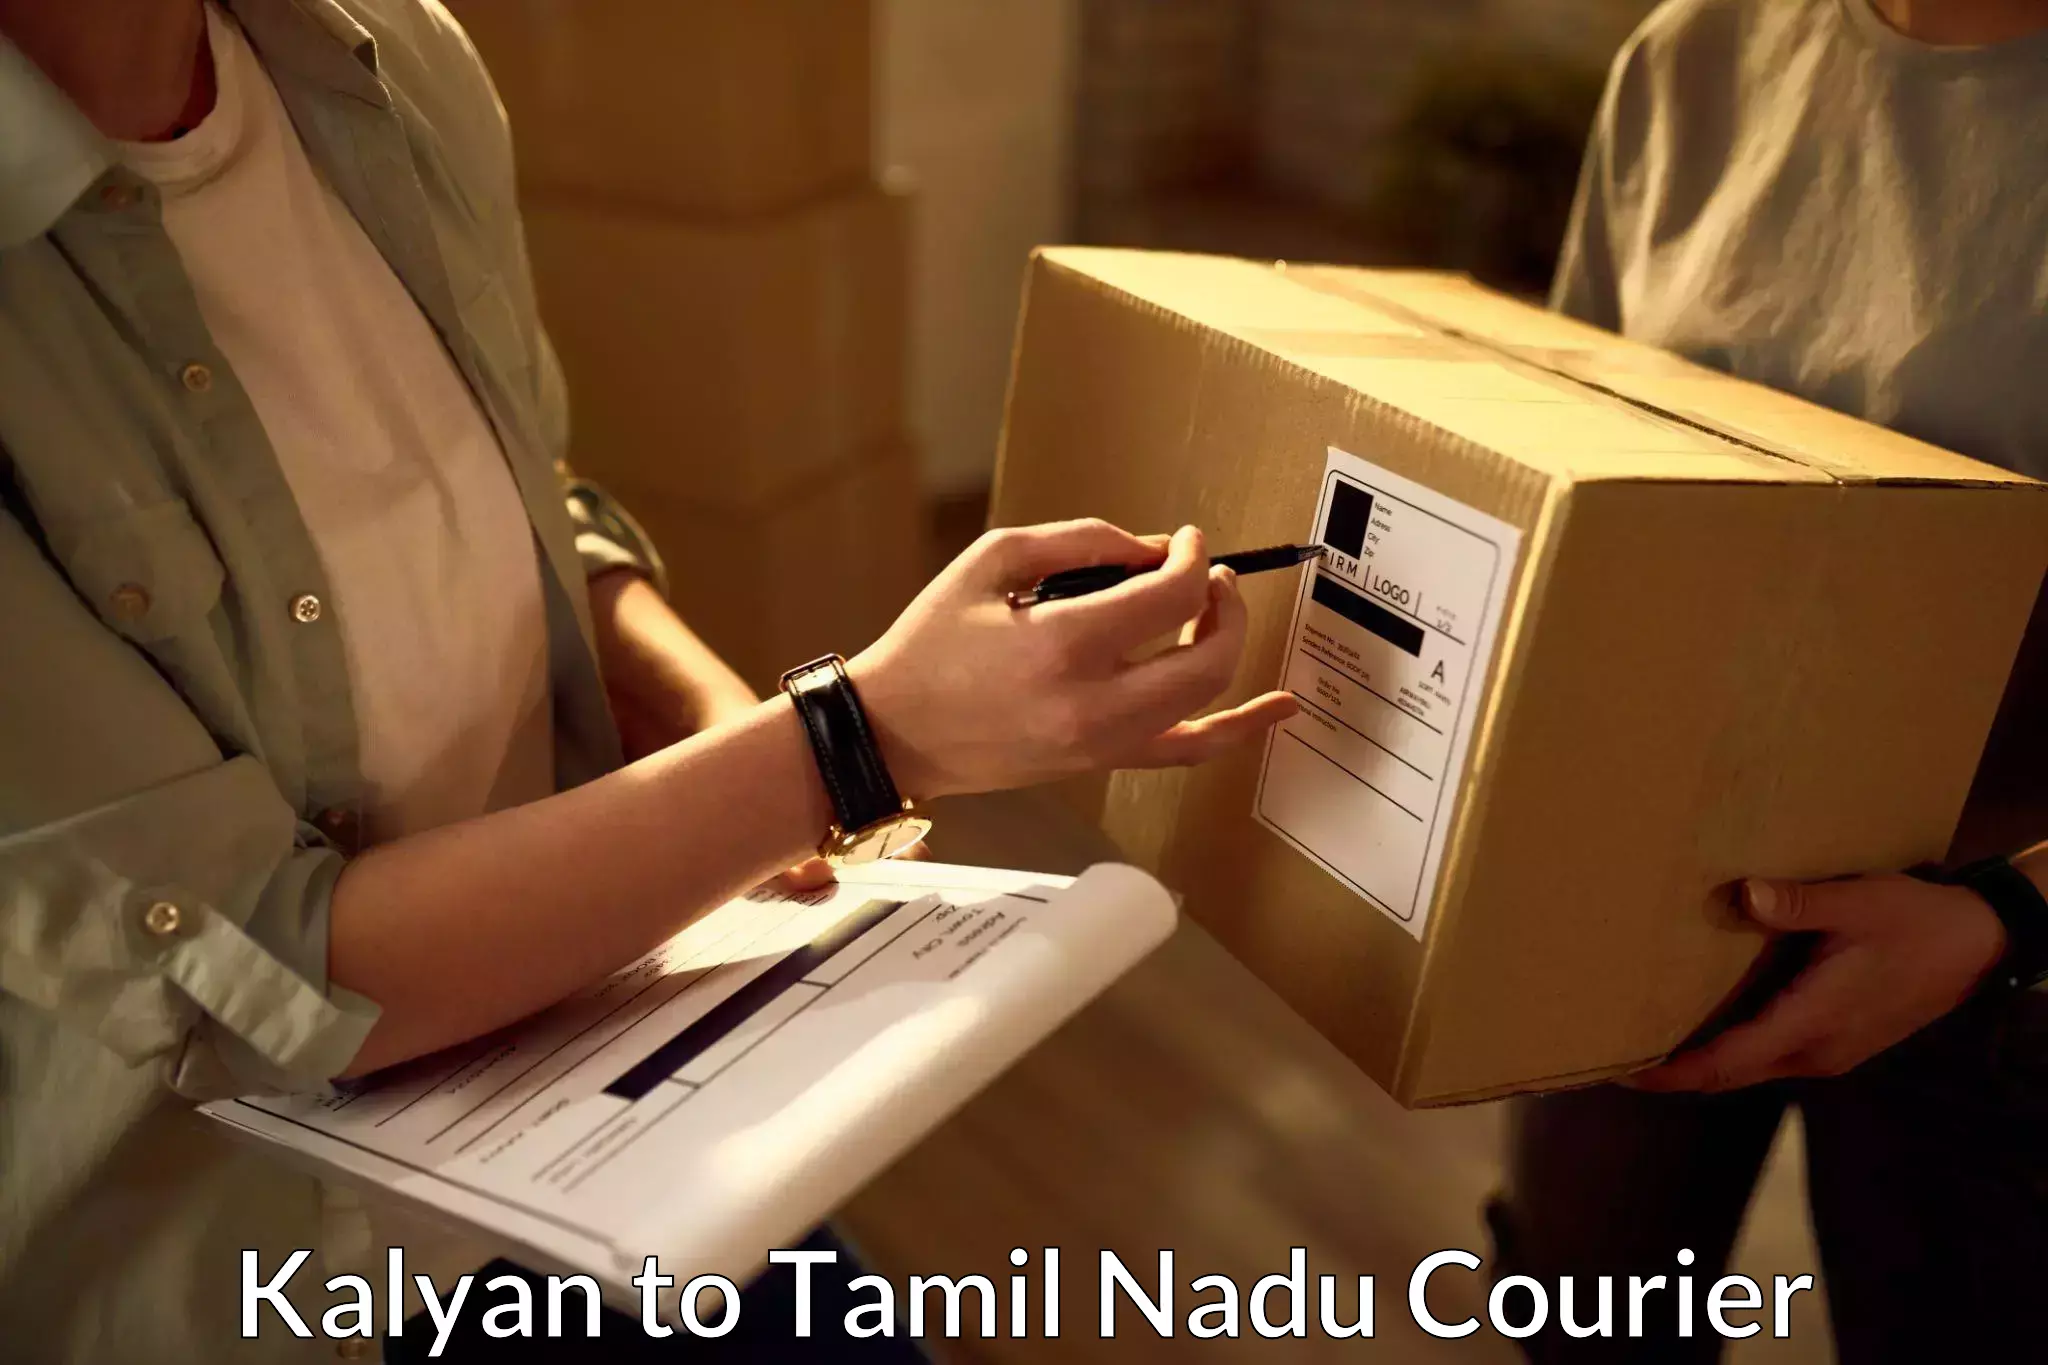 Automated shipping processes Kalyan to Tamil Nadu